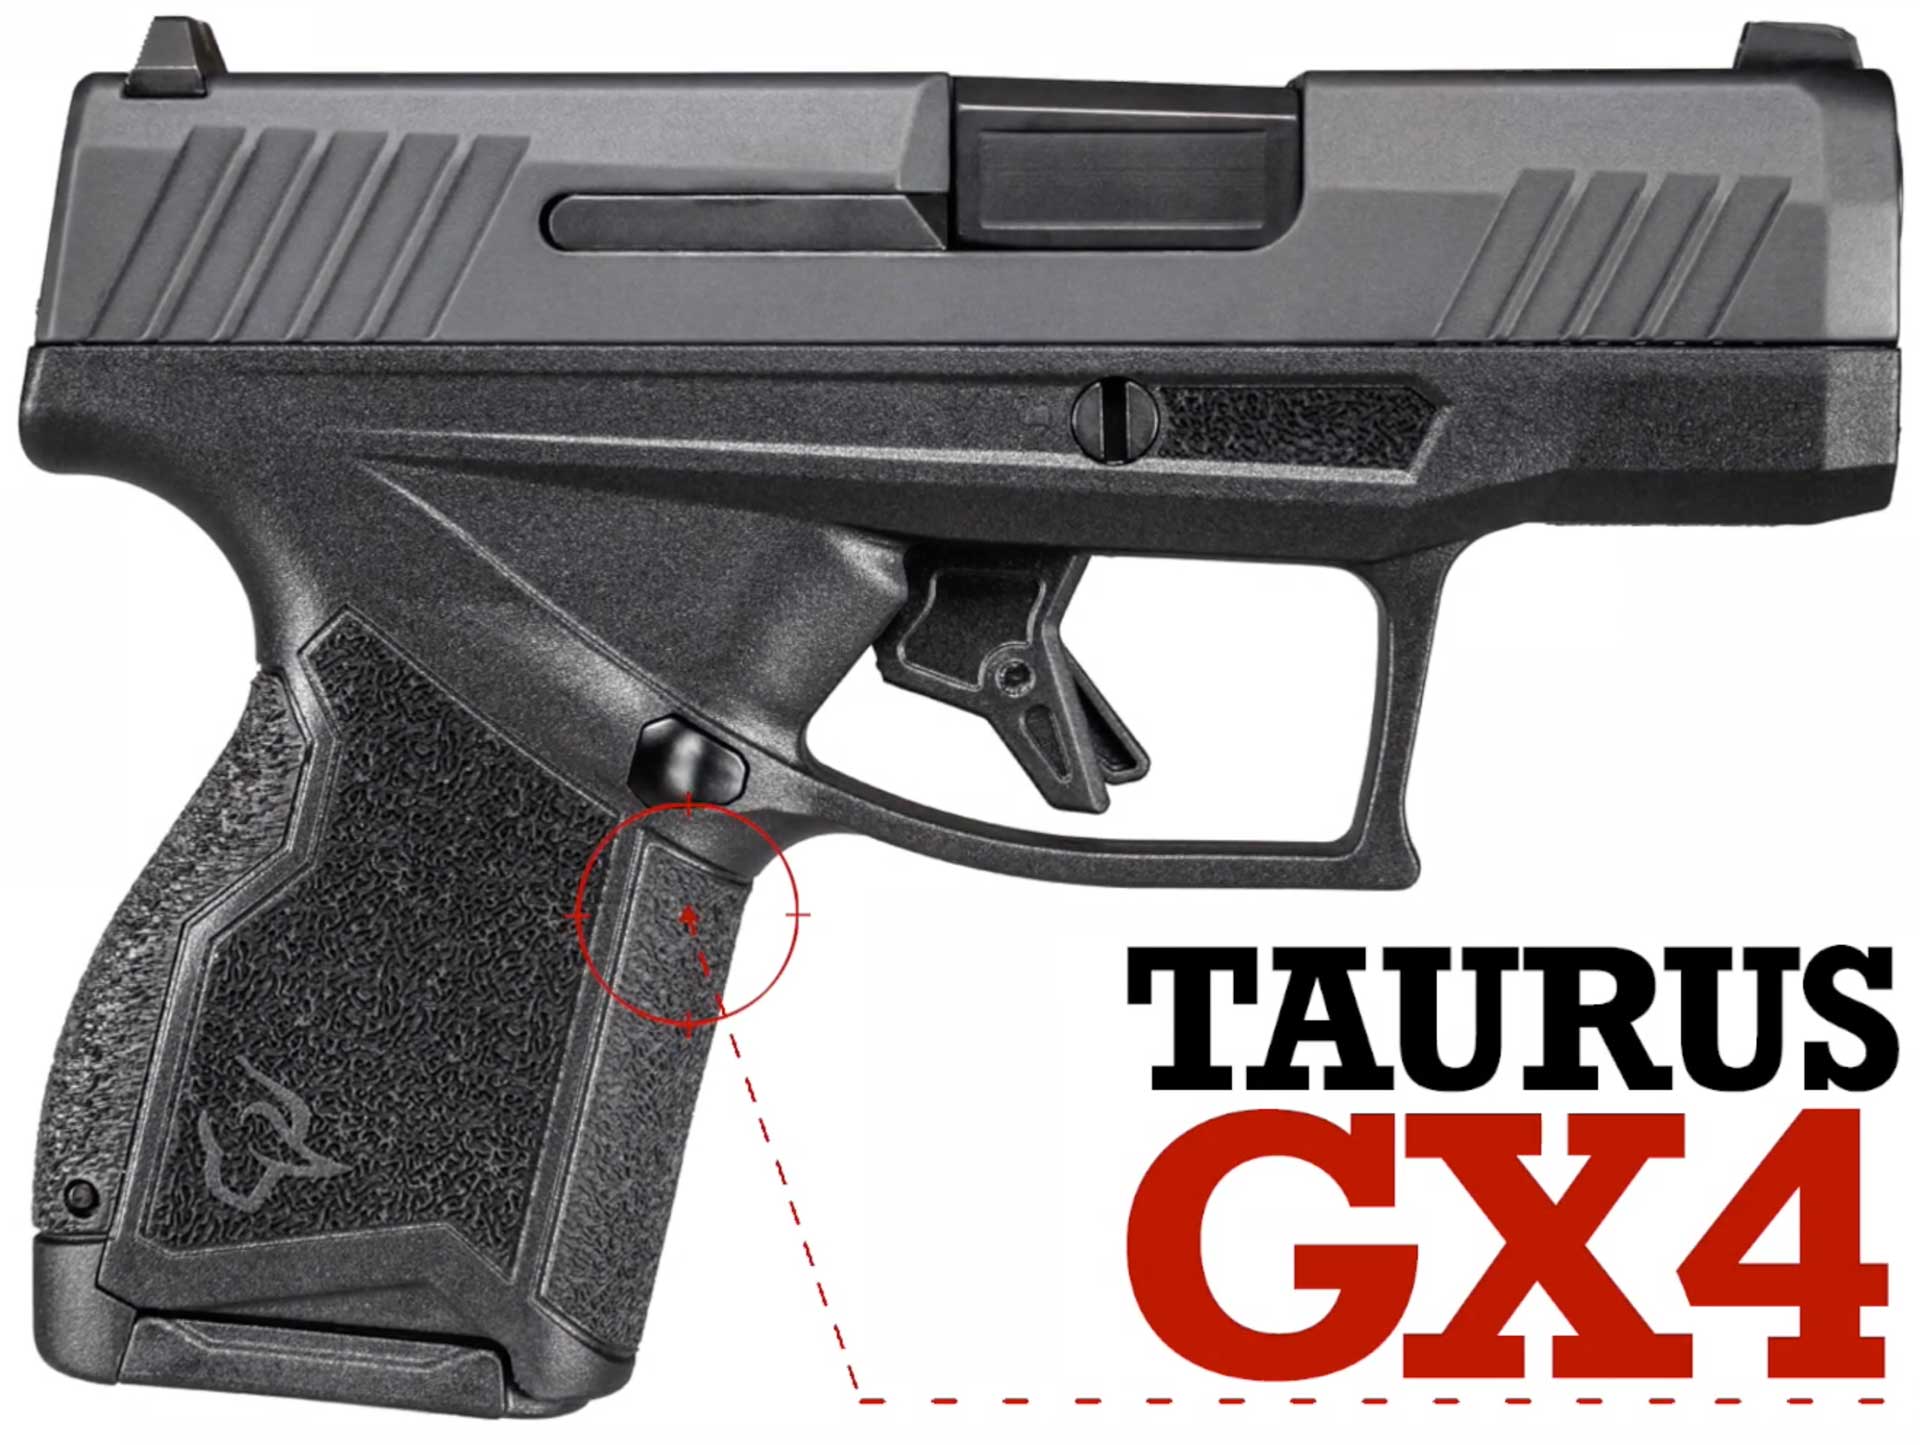 right side handgun pistol black 9 mm semi-automatic text on image noting Taurus GX4